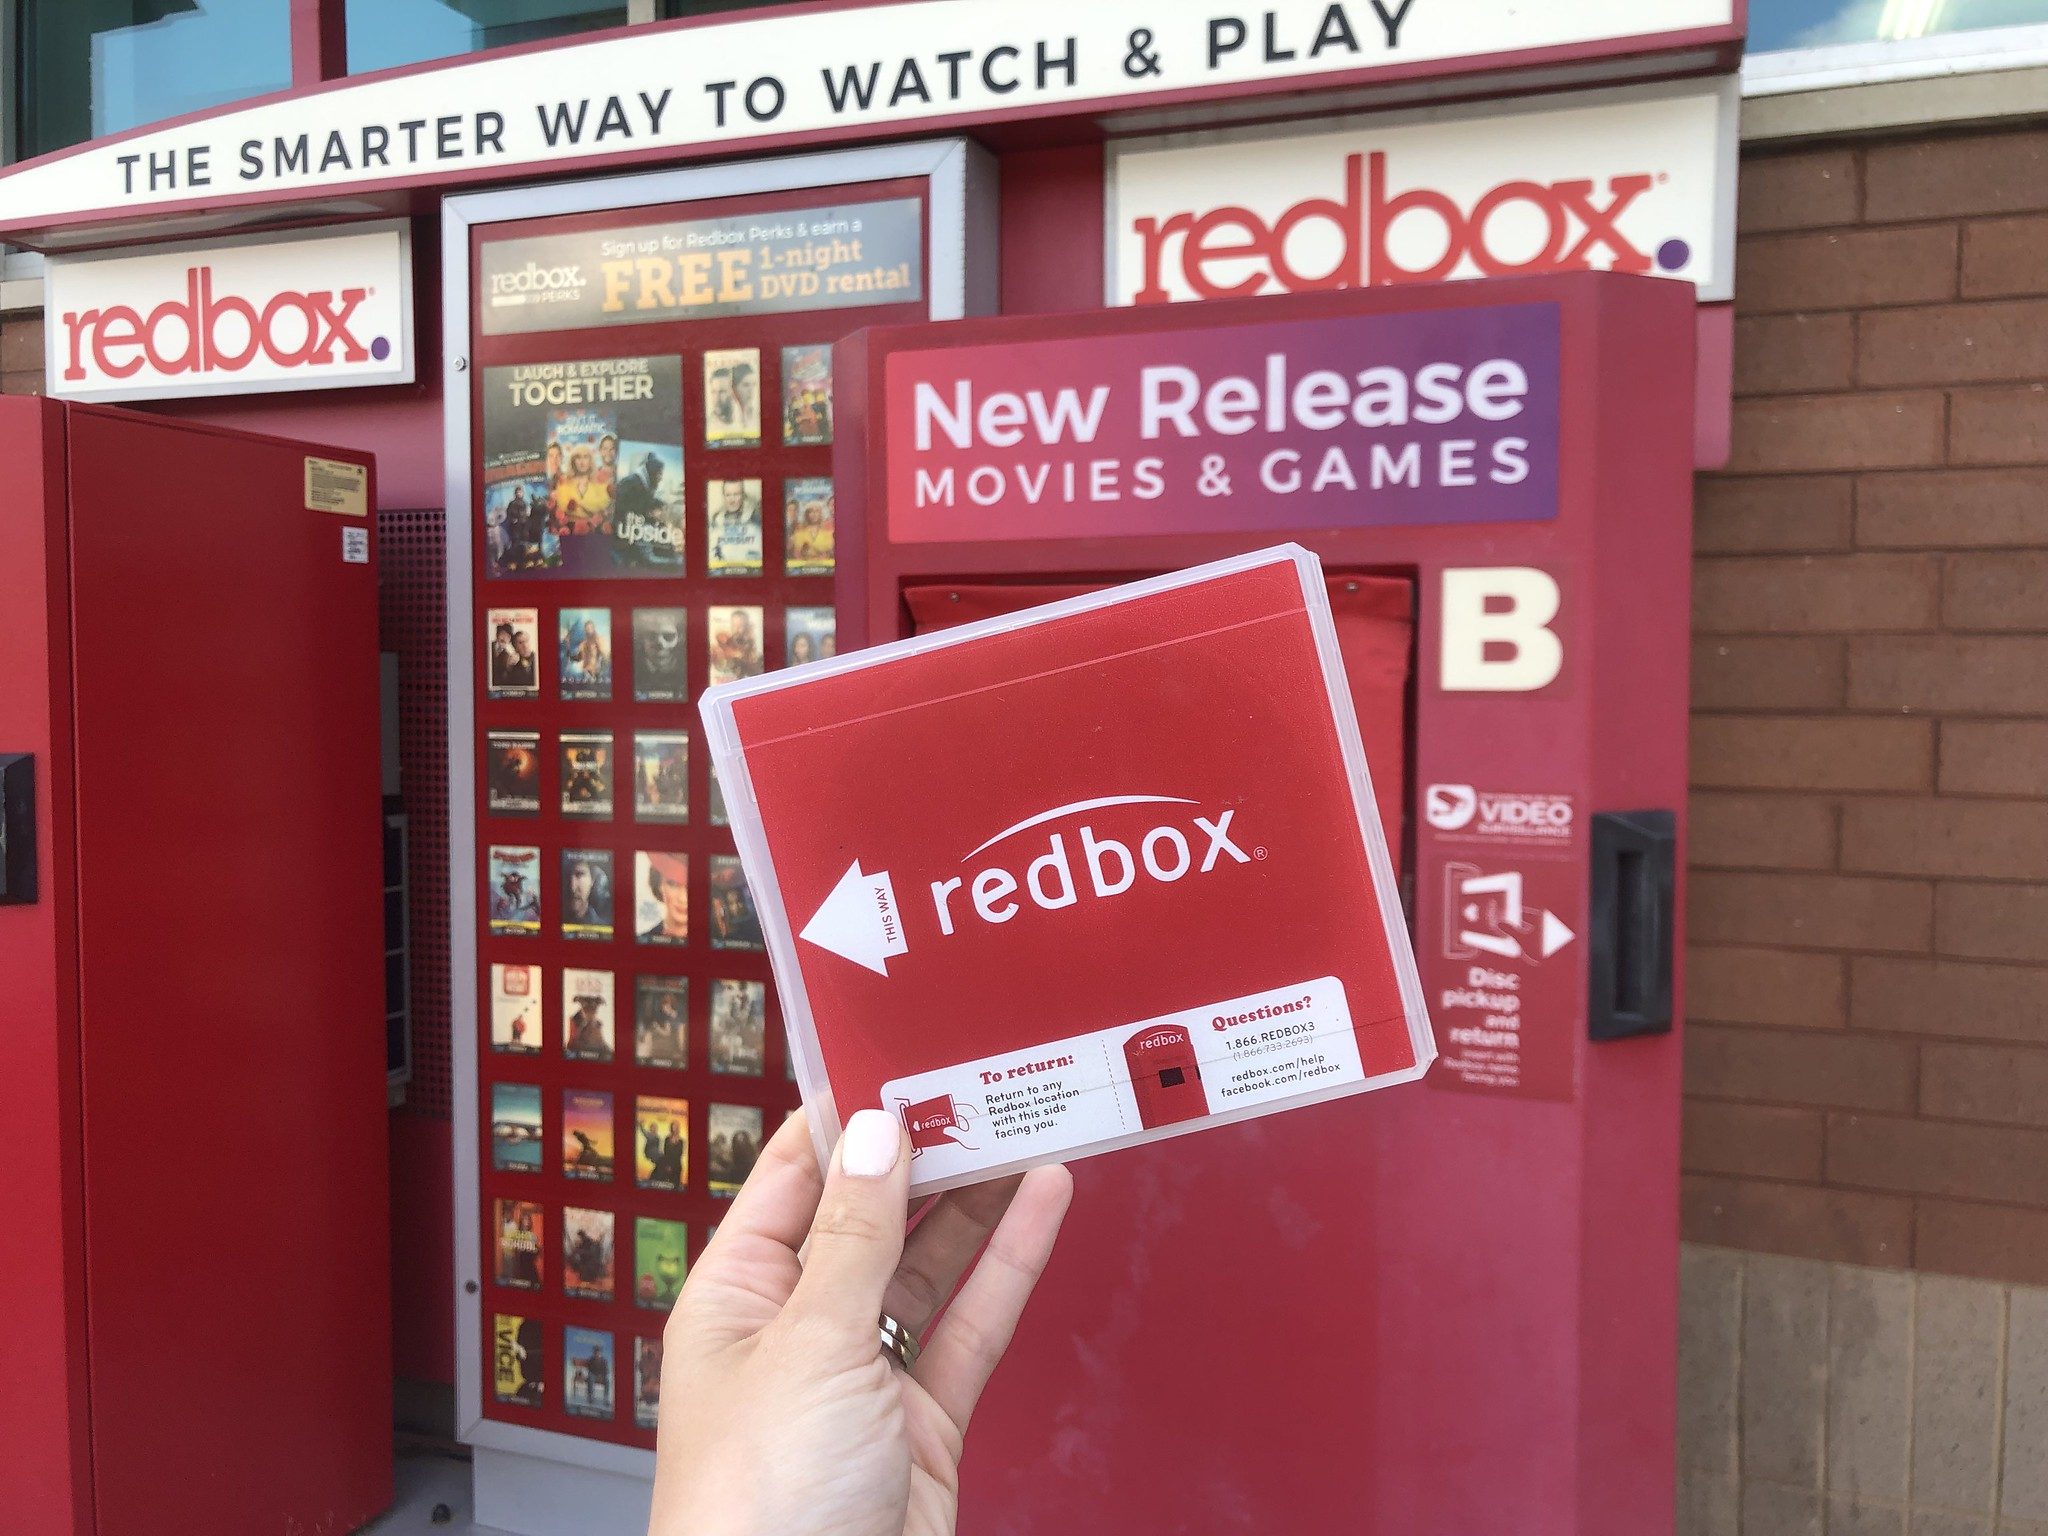 Redbox. The Red Box. Unique codes